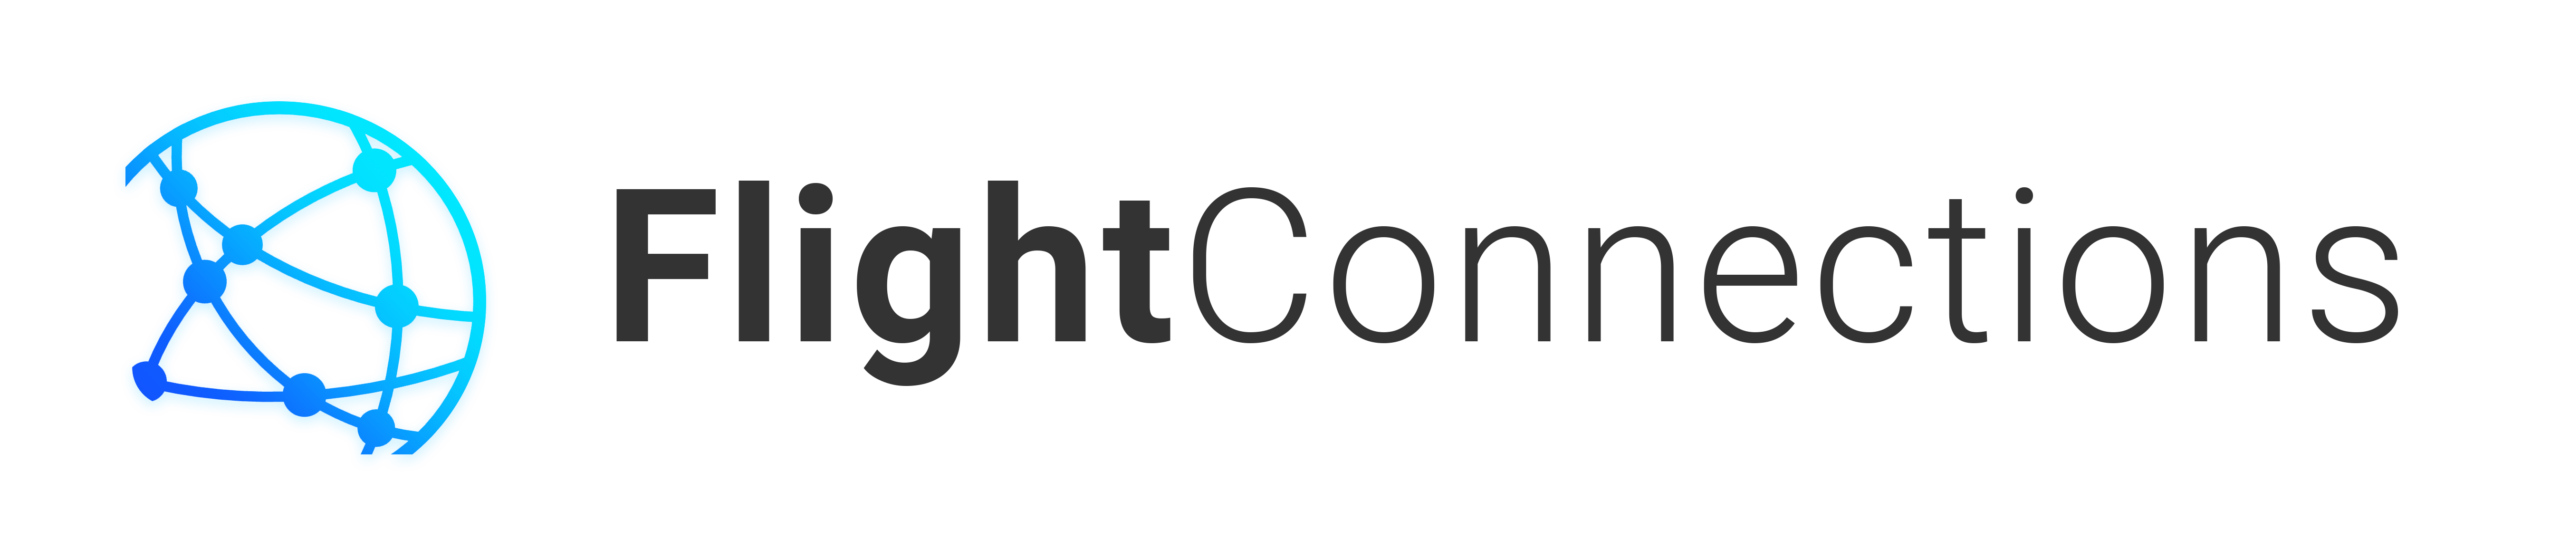 flight connections logo